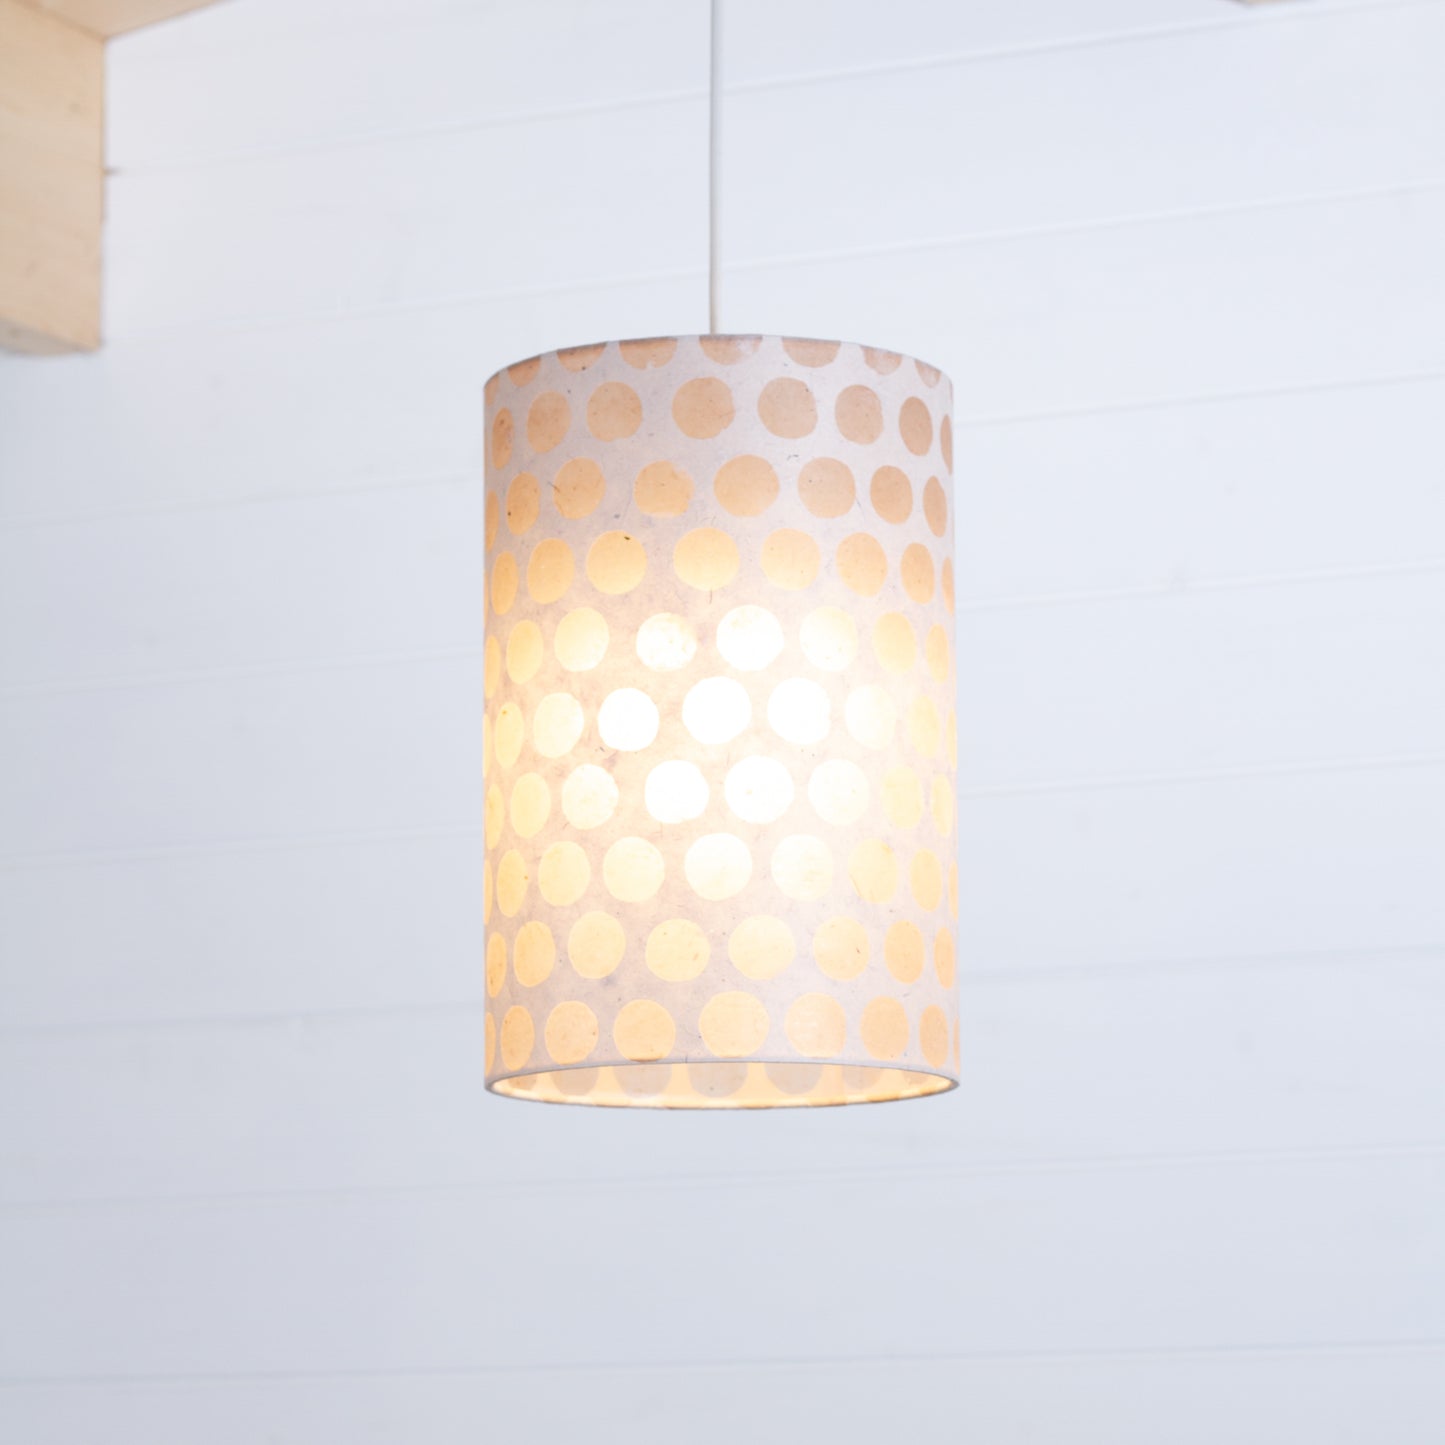 Drum Lamp Shade - P85 ~ Batik Dots on Natural, 20cm(d) x 30cm(h)